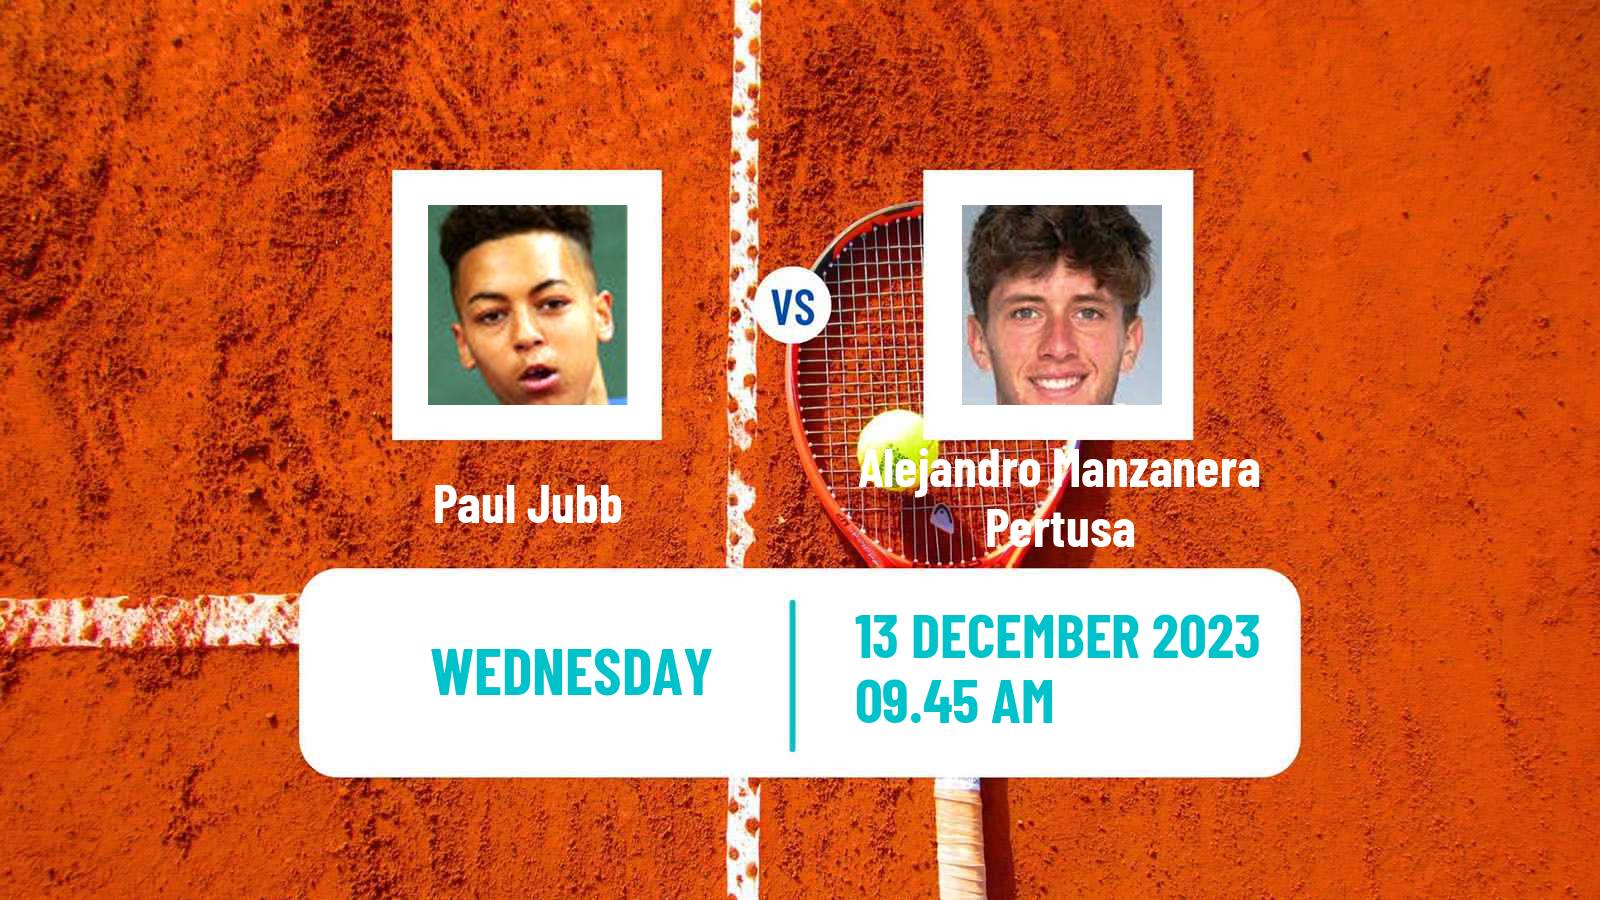 Tennis ITF M15 Ceuta Men Paul Jubb - Alejandro Manzanera Pertusa